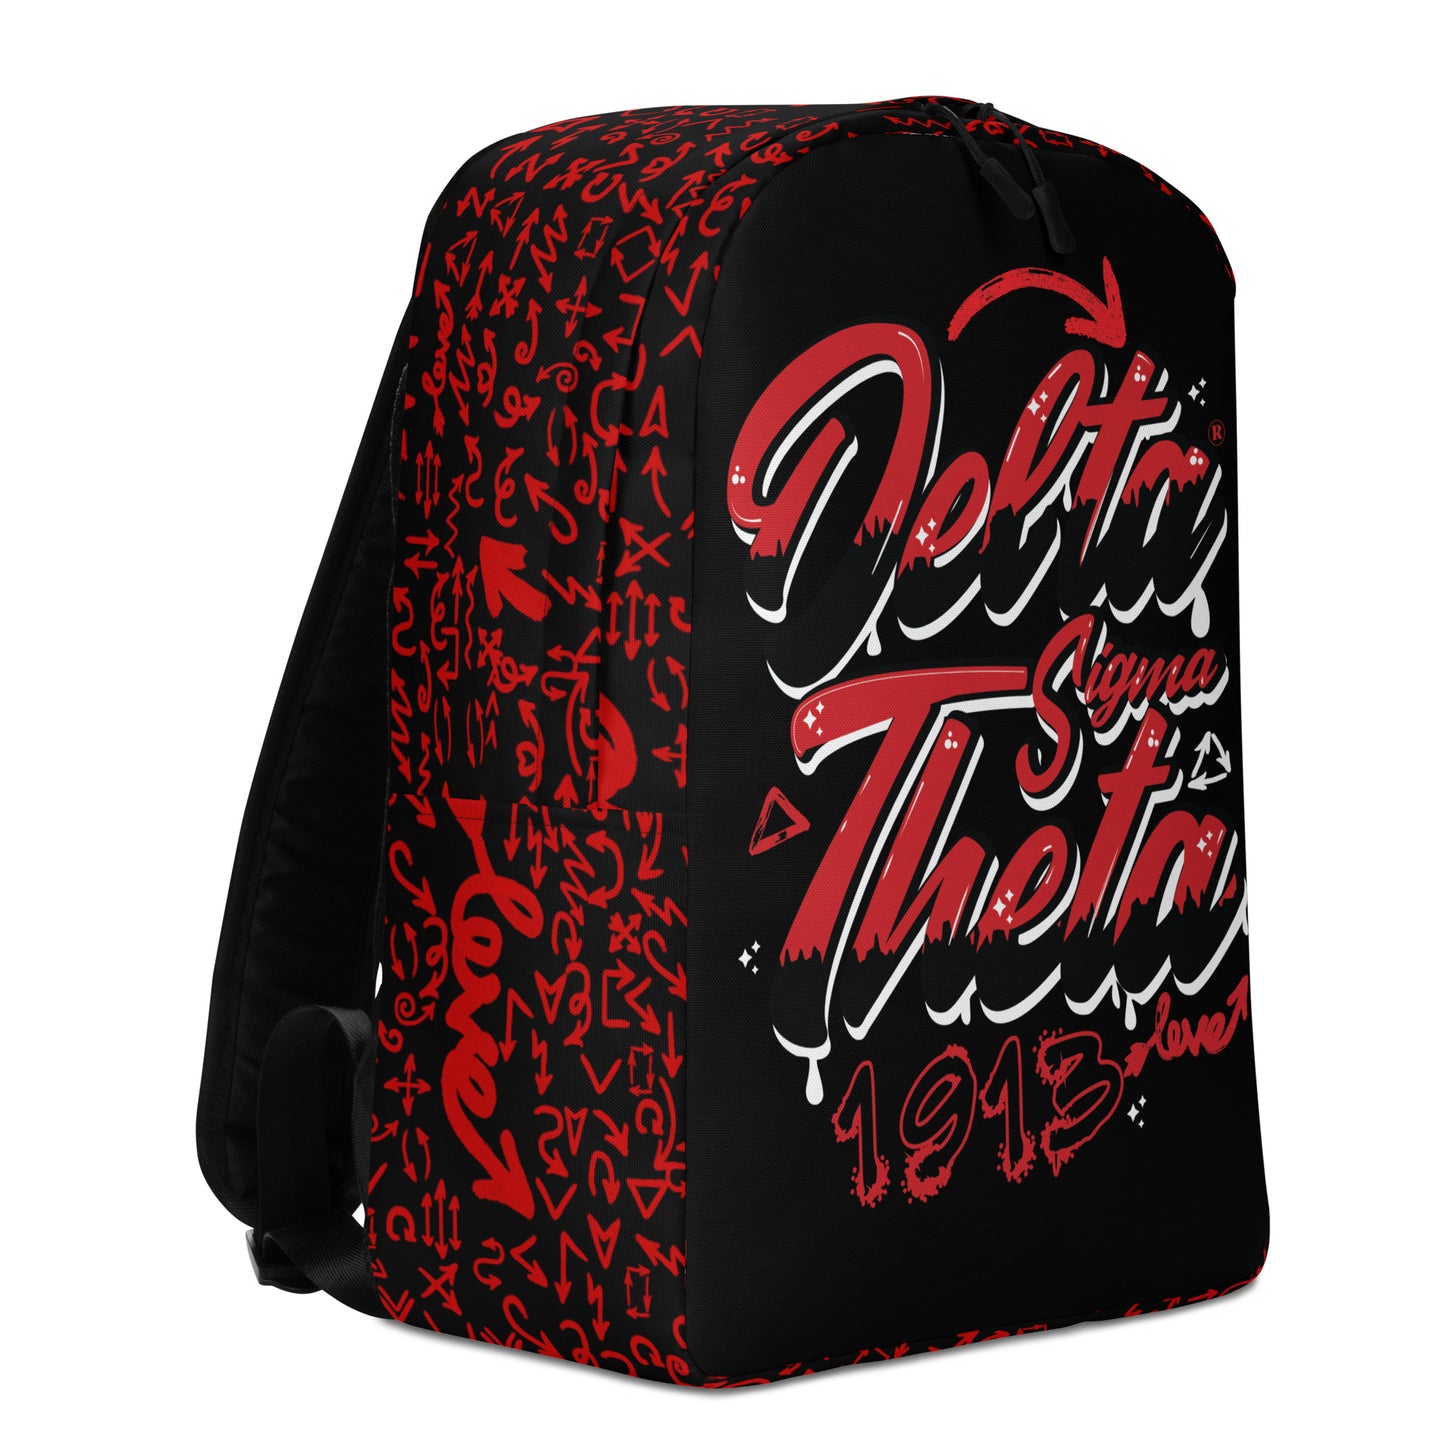 Delta Sigma Theta Graffiti Level Up Minimalist Backpack